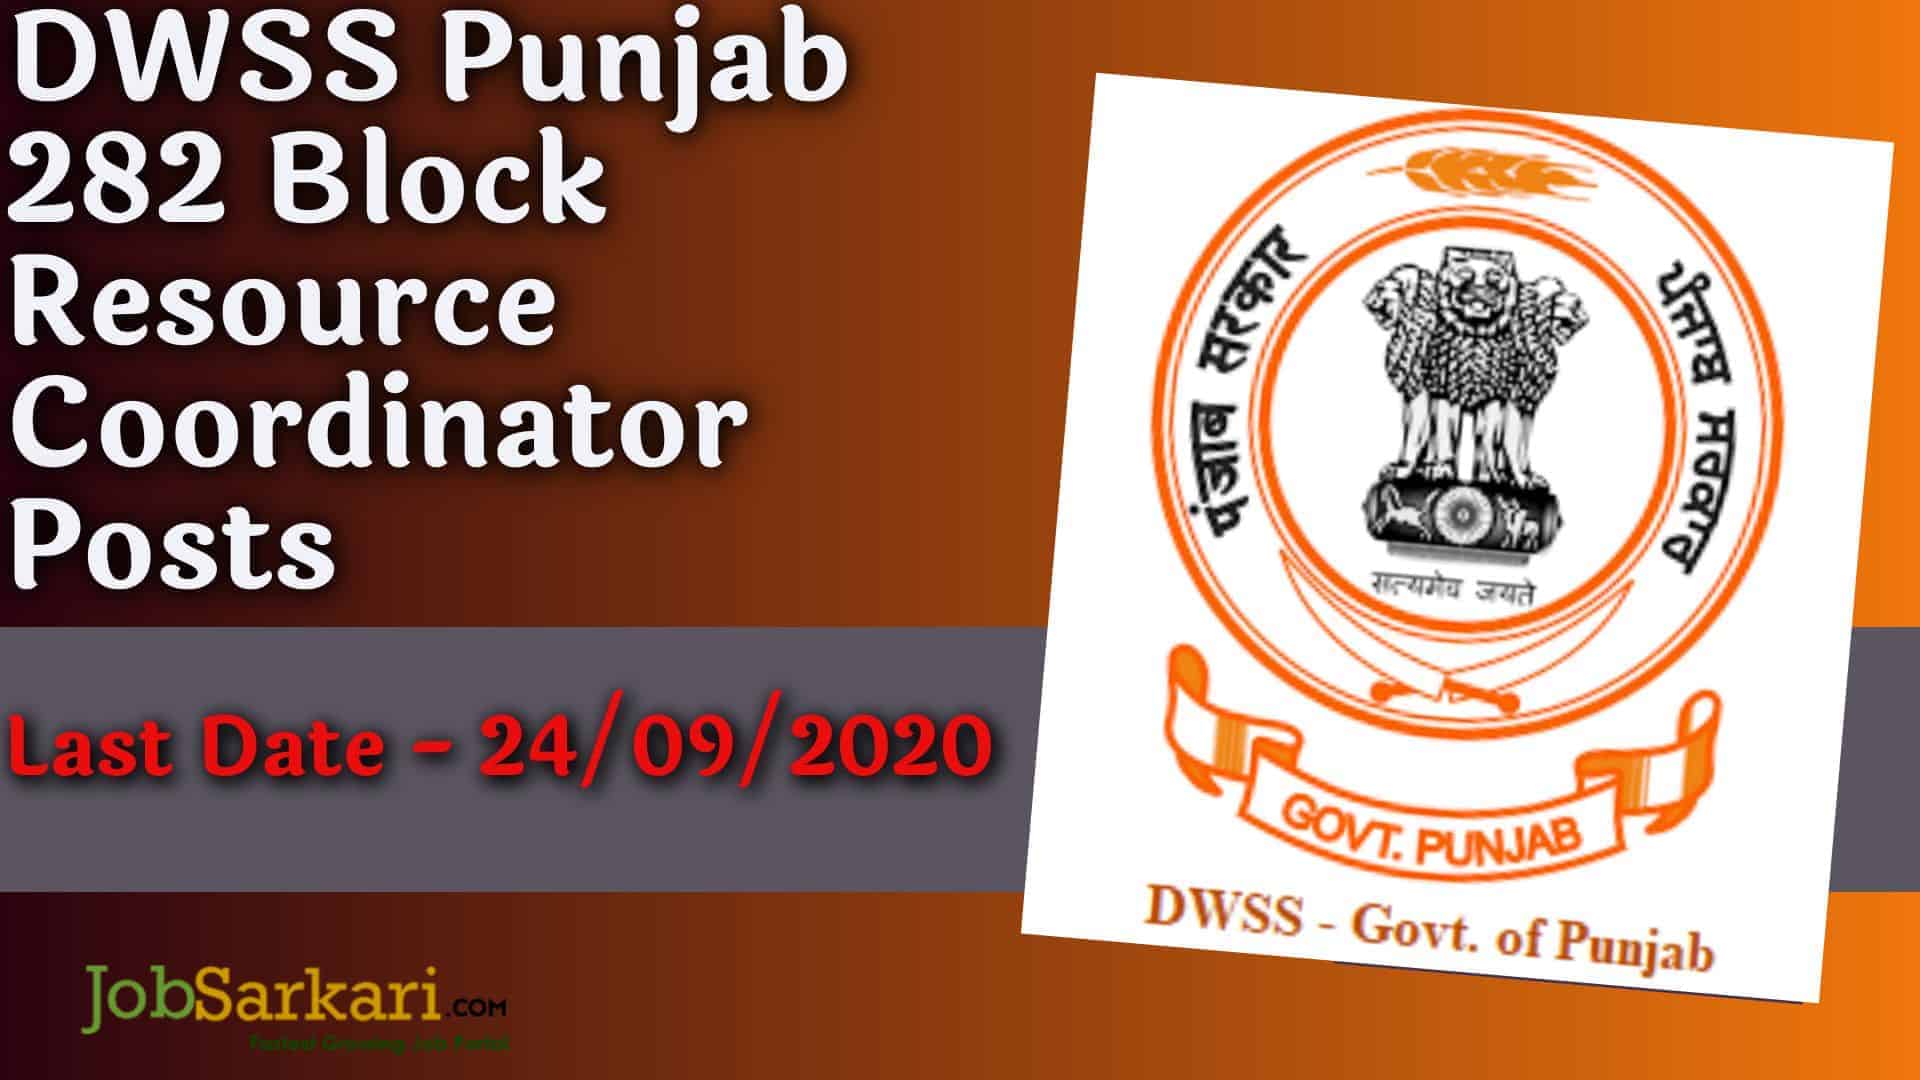 DWSS Punjab 282 Block Resource Coordinator Posts